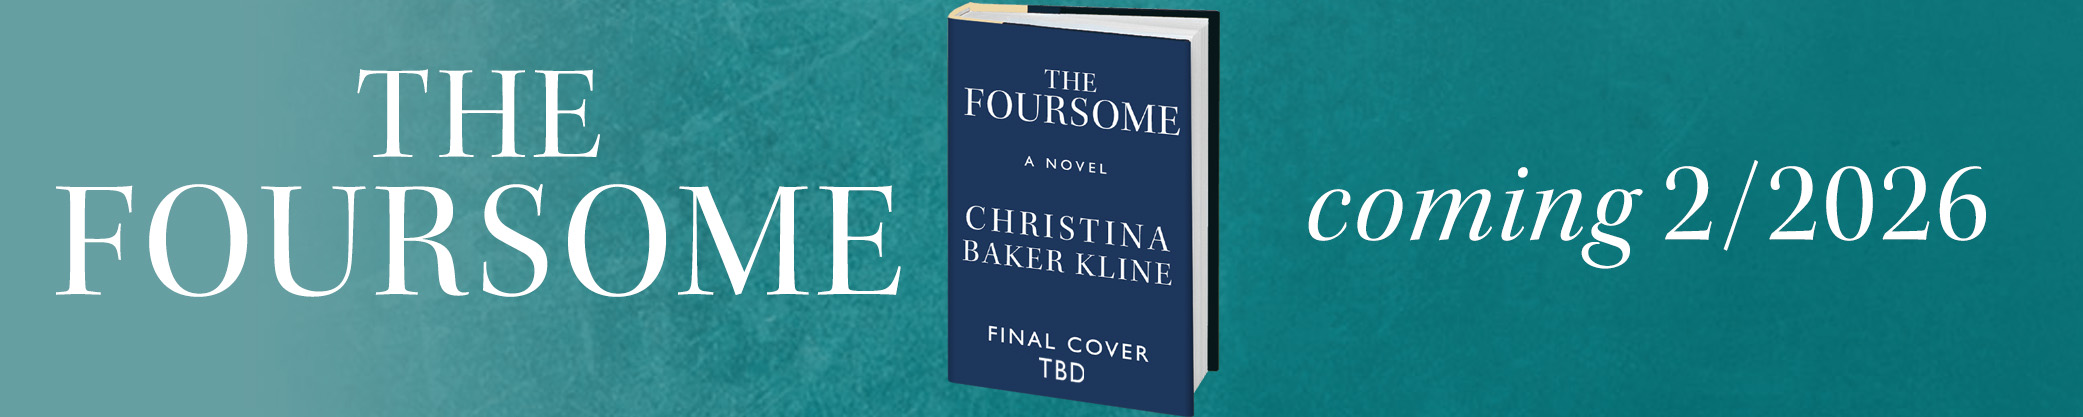 The Foursome by Christina Baker Kline